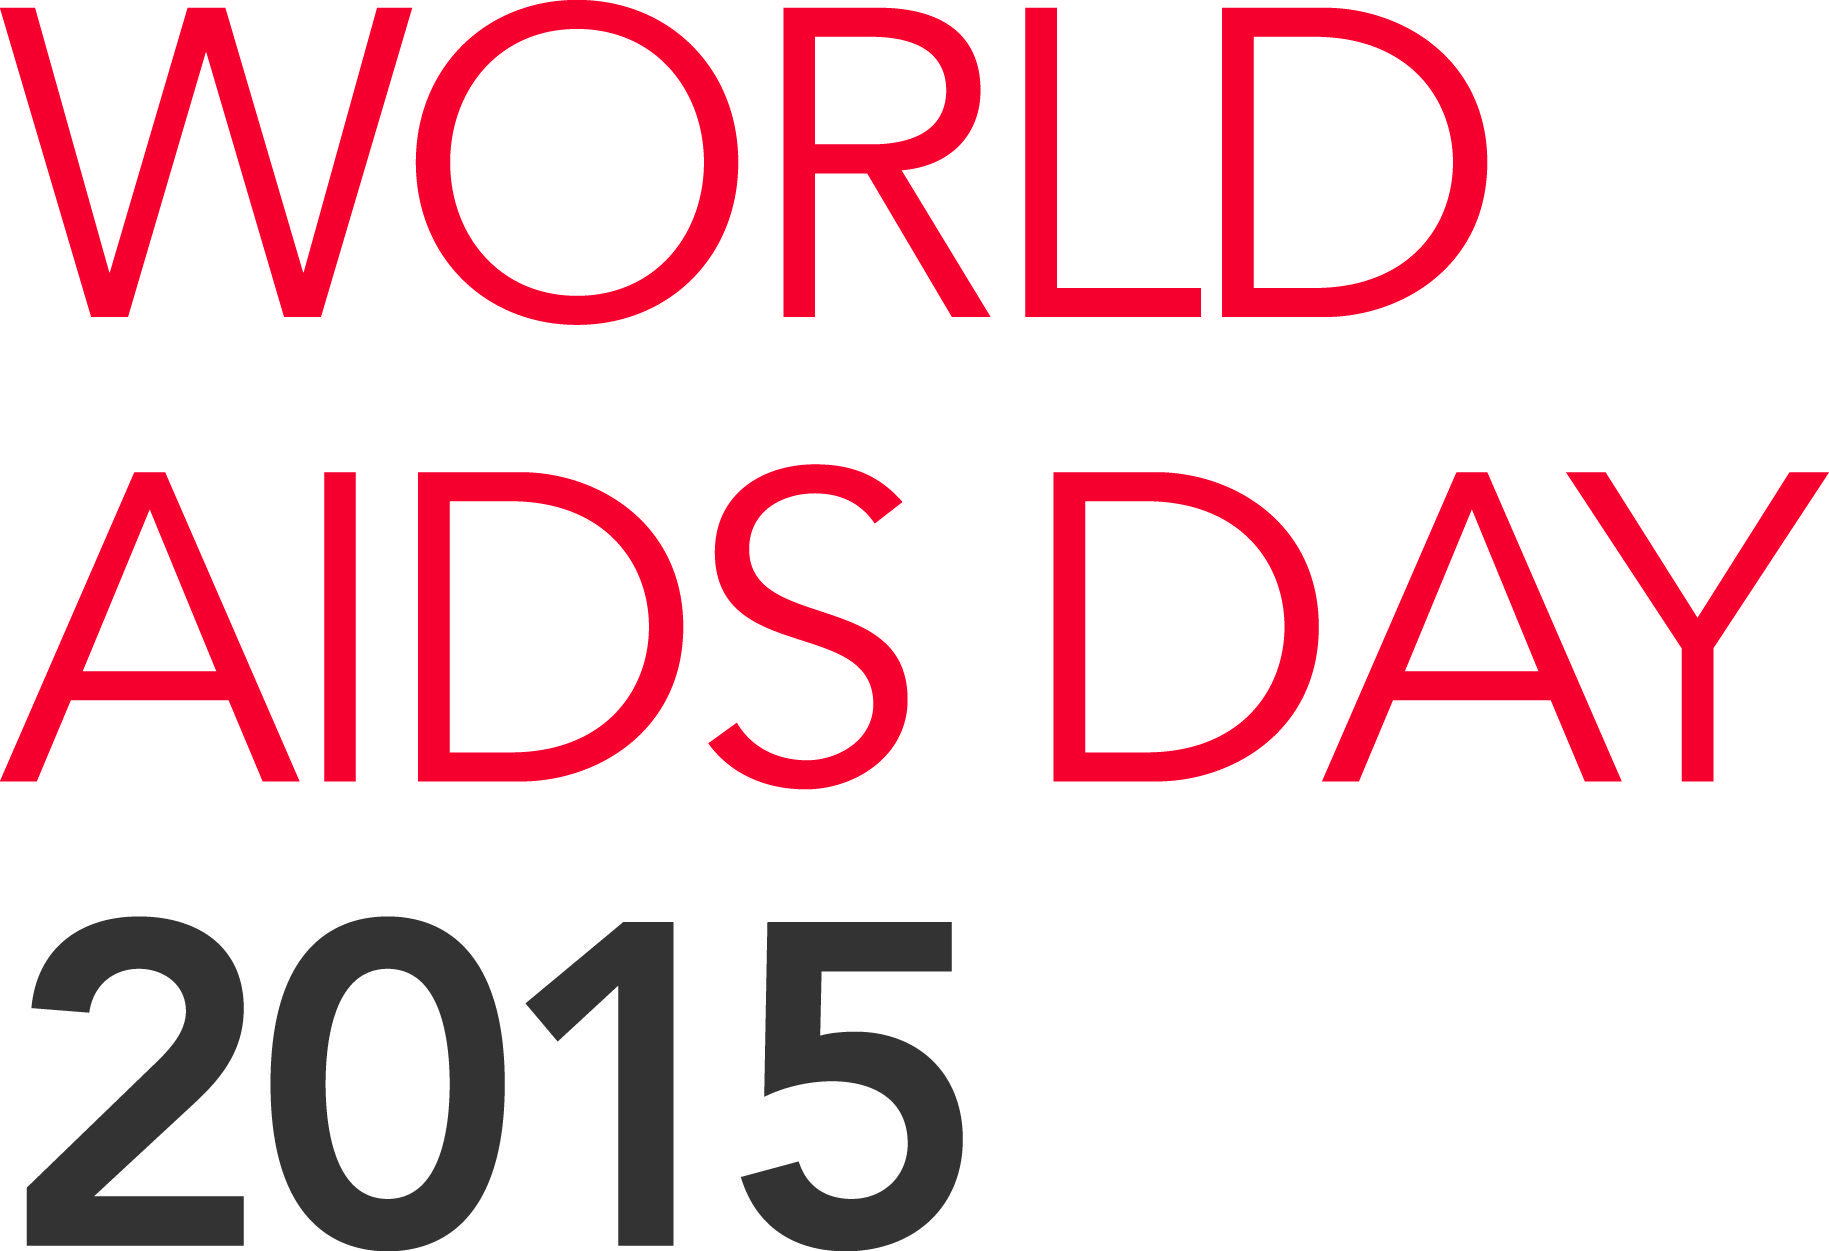 UNAIDS Logo - World AIDS Day 2015 - Campaign materials | UNAIDS